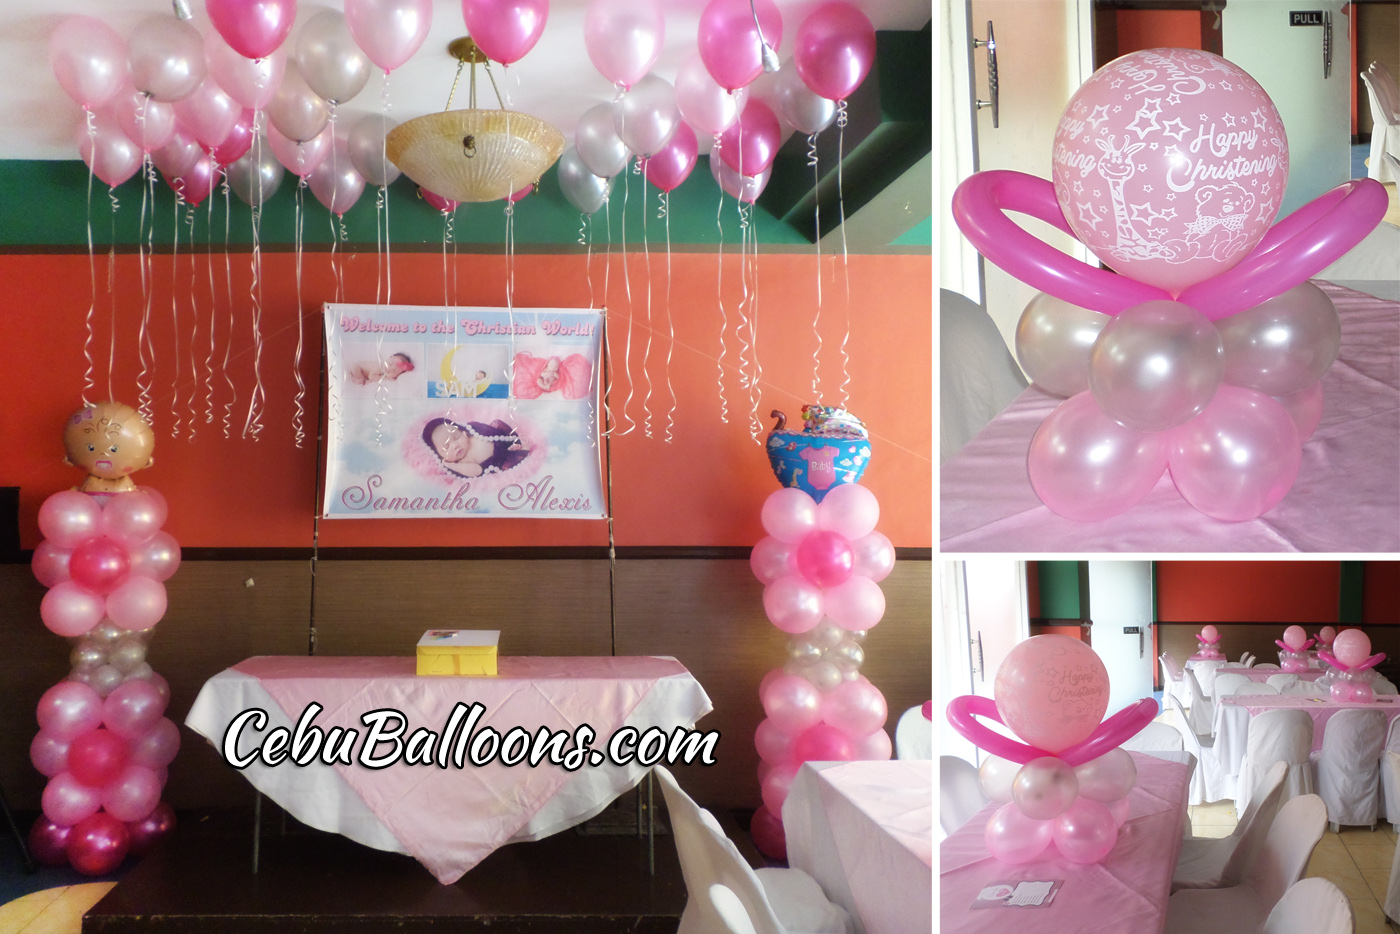  Birthday Party Venue Decoration Ideas  